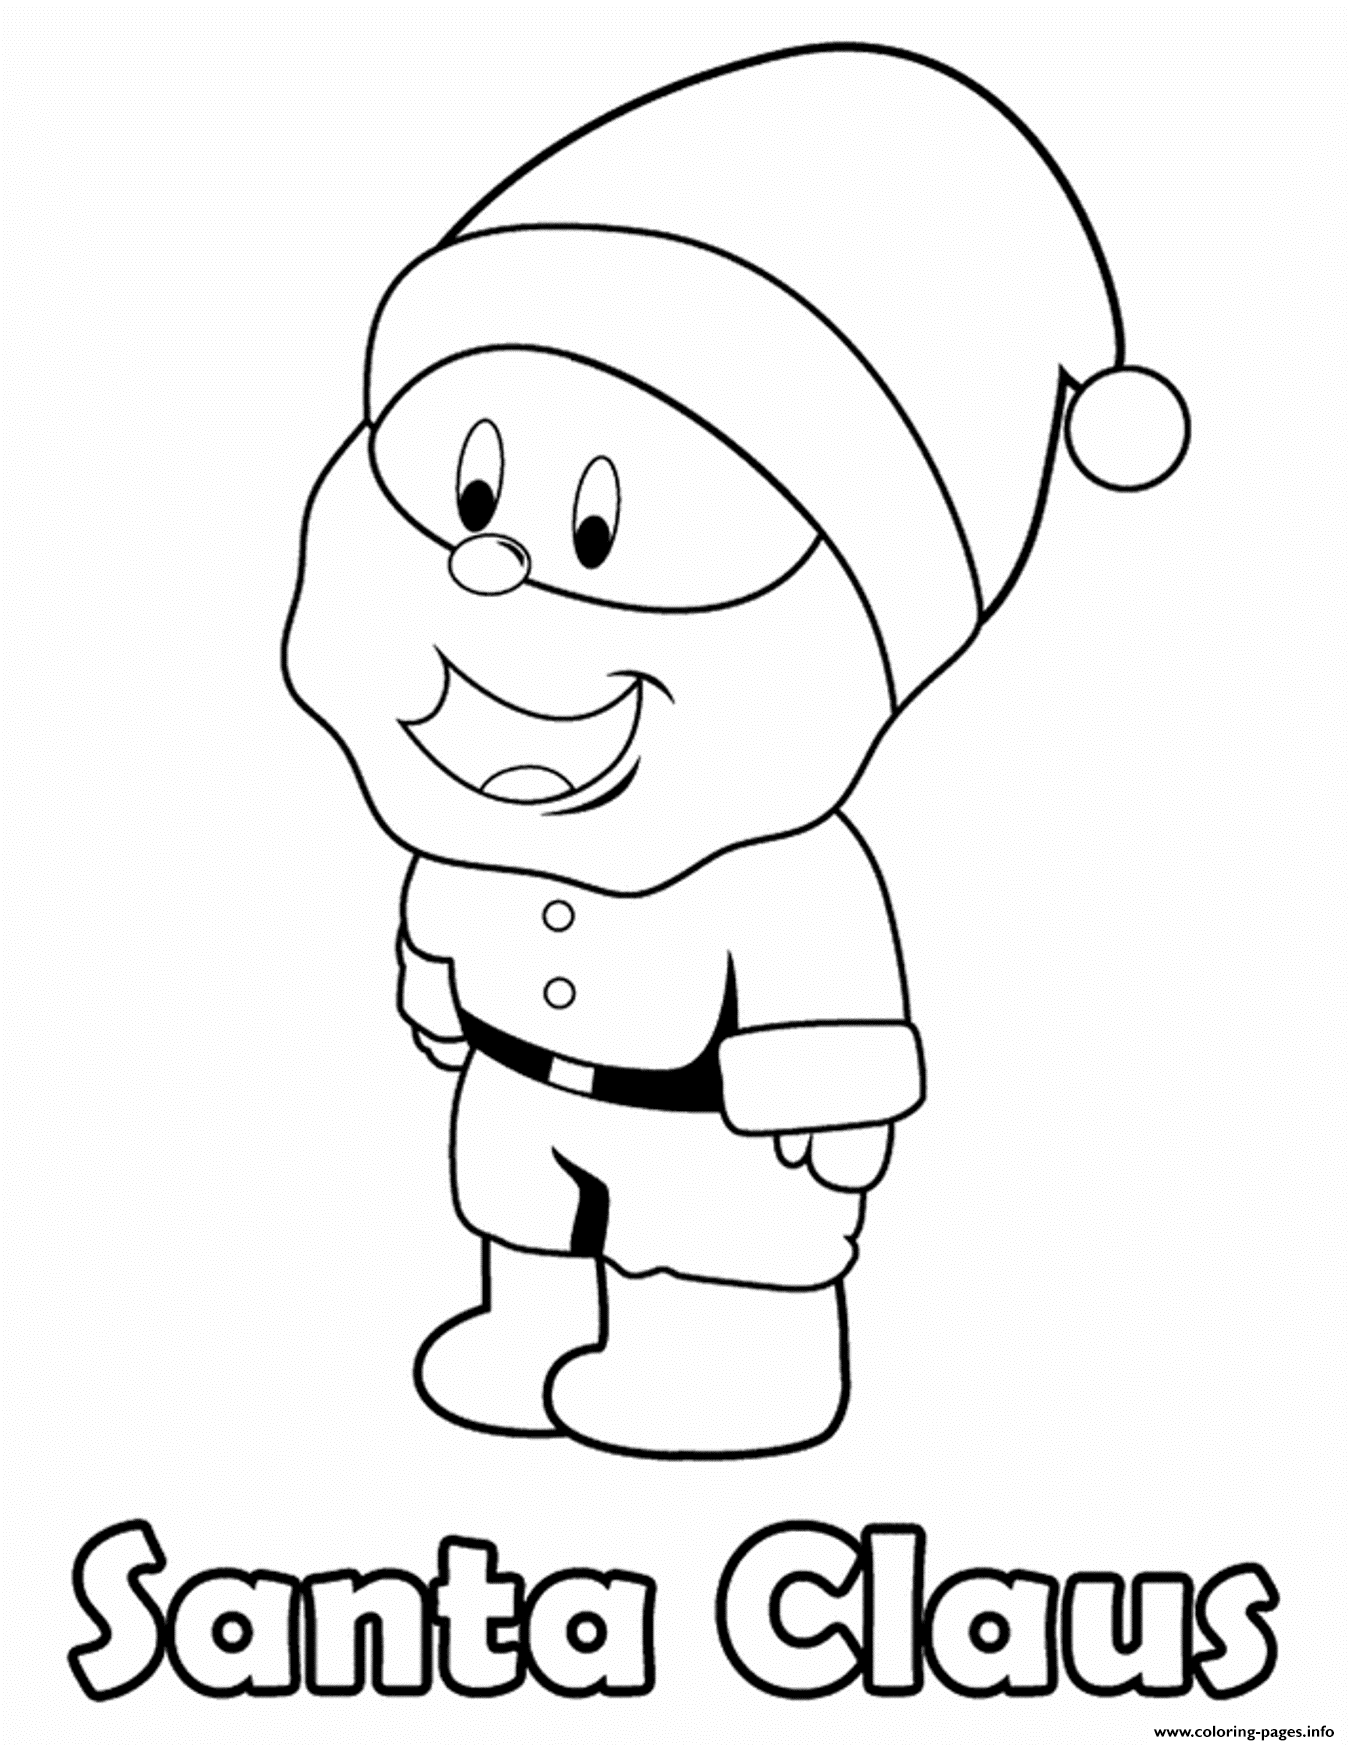 Christmas S Printable Santa Claus For Kids54ed coloring